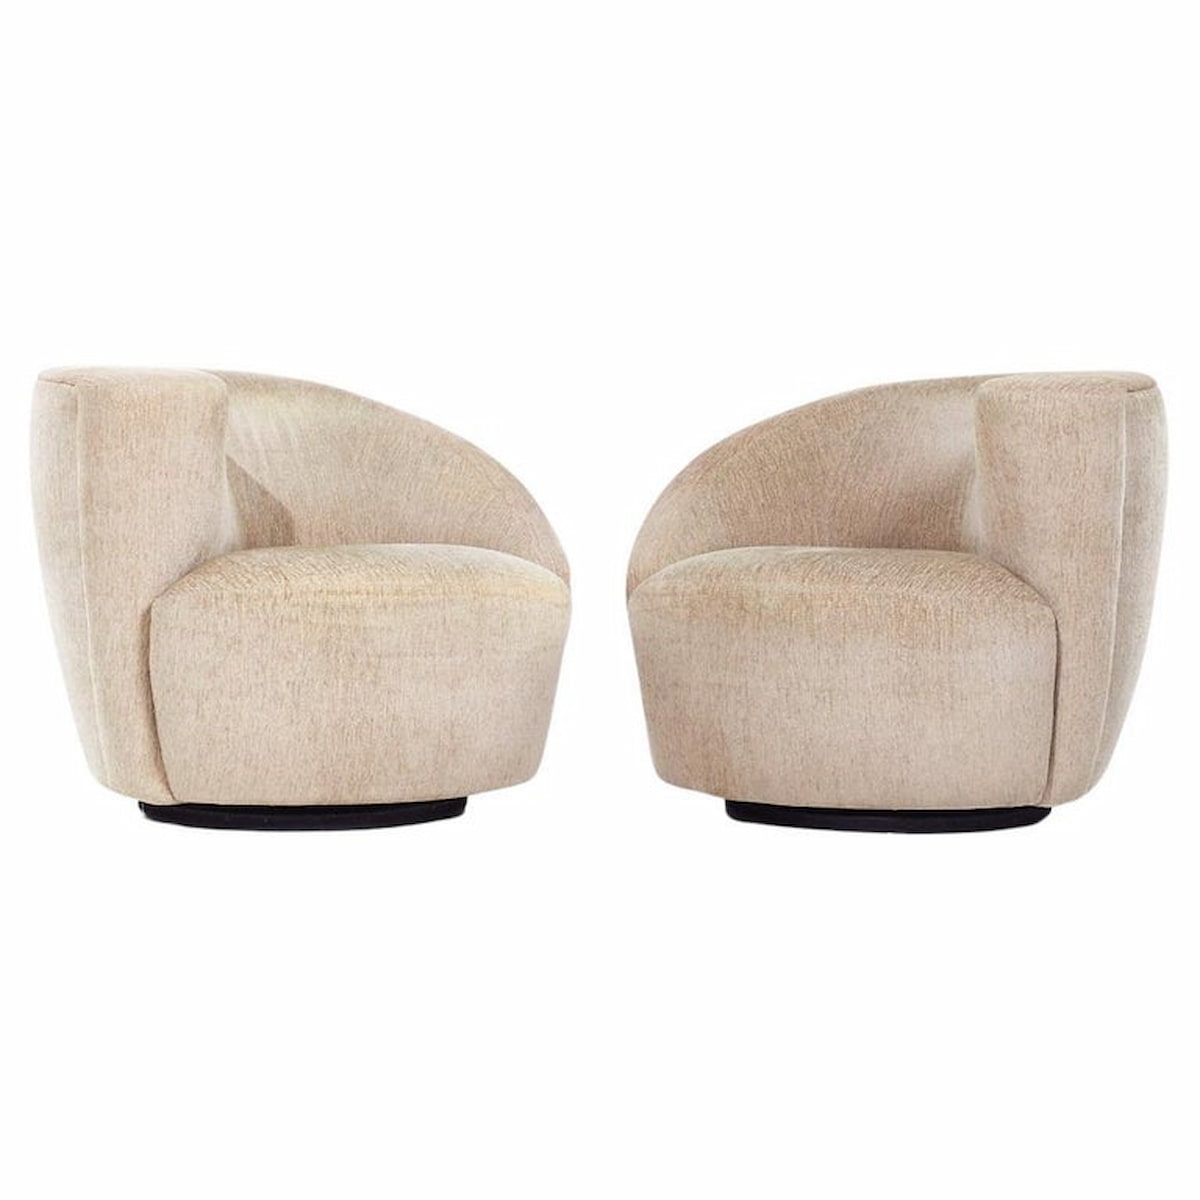 Vladimir Kagan Style Weiman Nautilus Mid Century Chairs - Pair